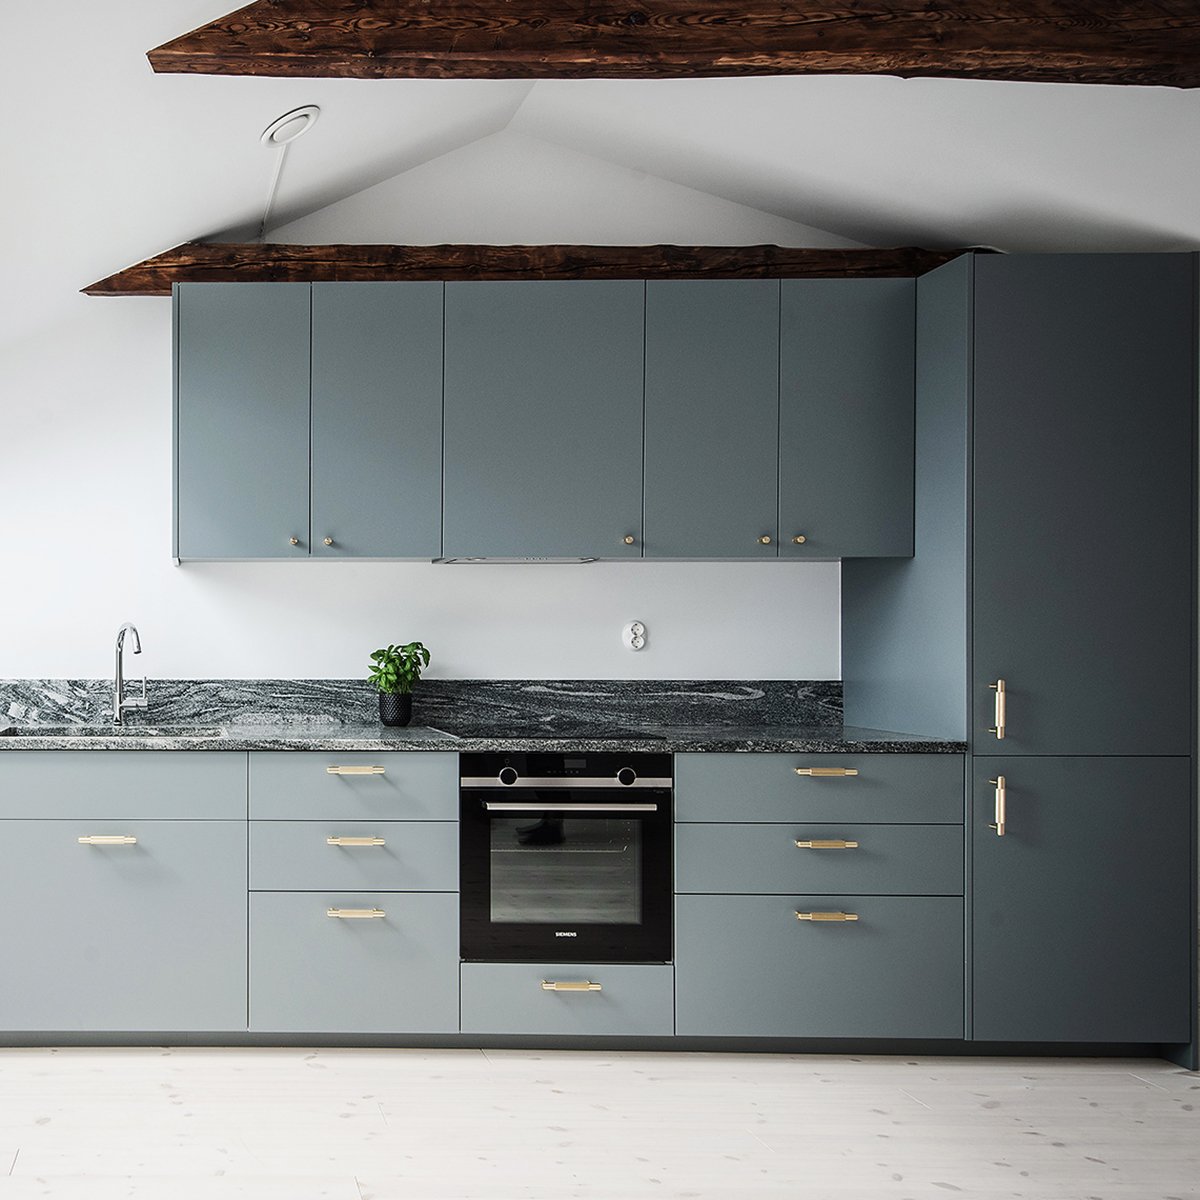 KEEP CALM / brass hardware + @FarrowandBall lichen + verde san denise marble / space @no18official apartments #stockholm #kitchendesign #busterandpunch